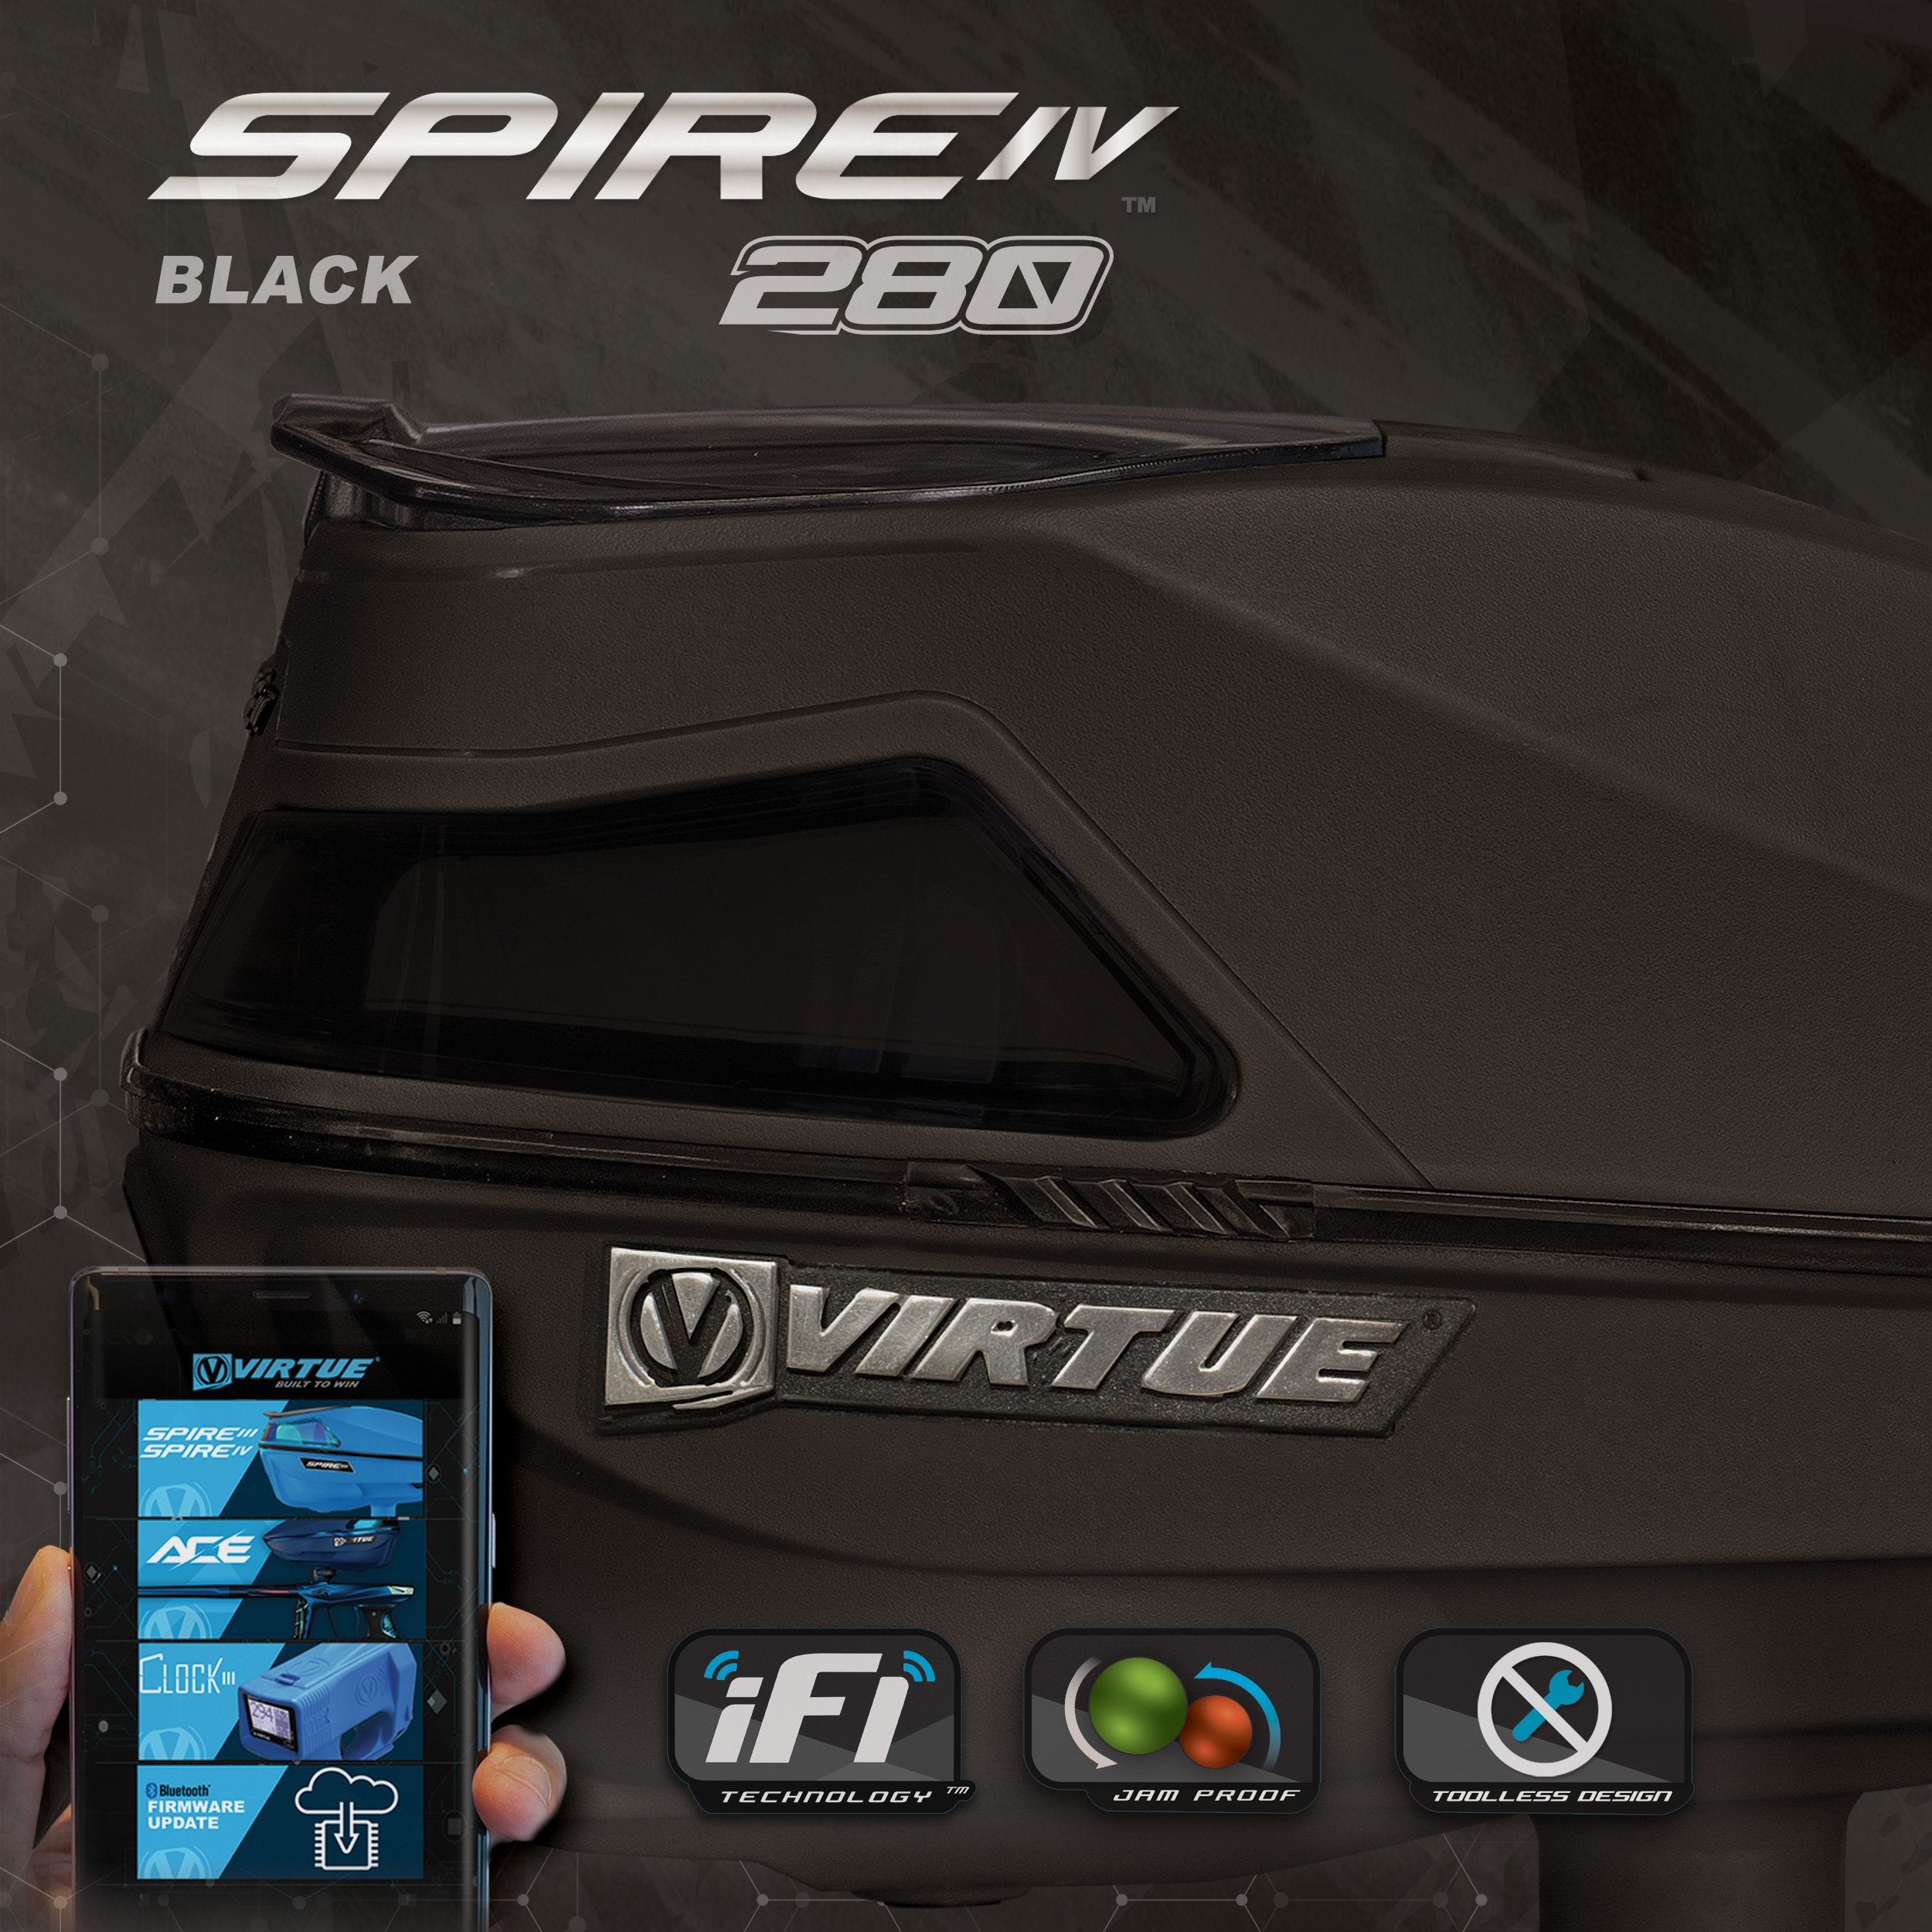 zzz - Virtue Spire IV Loader - Black 280